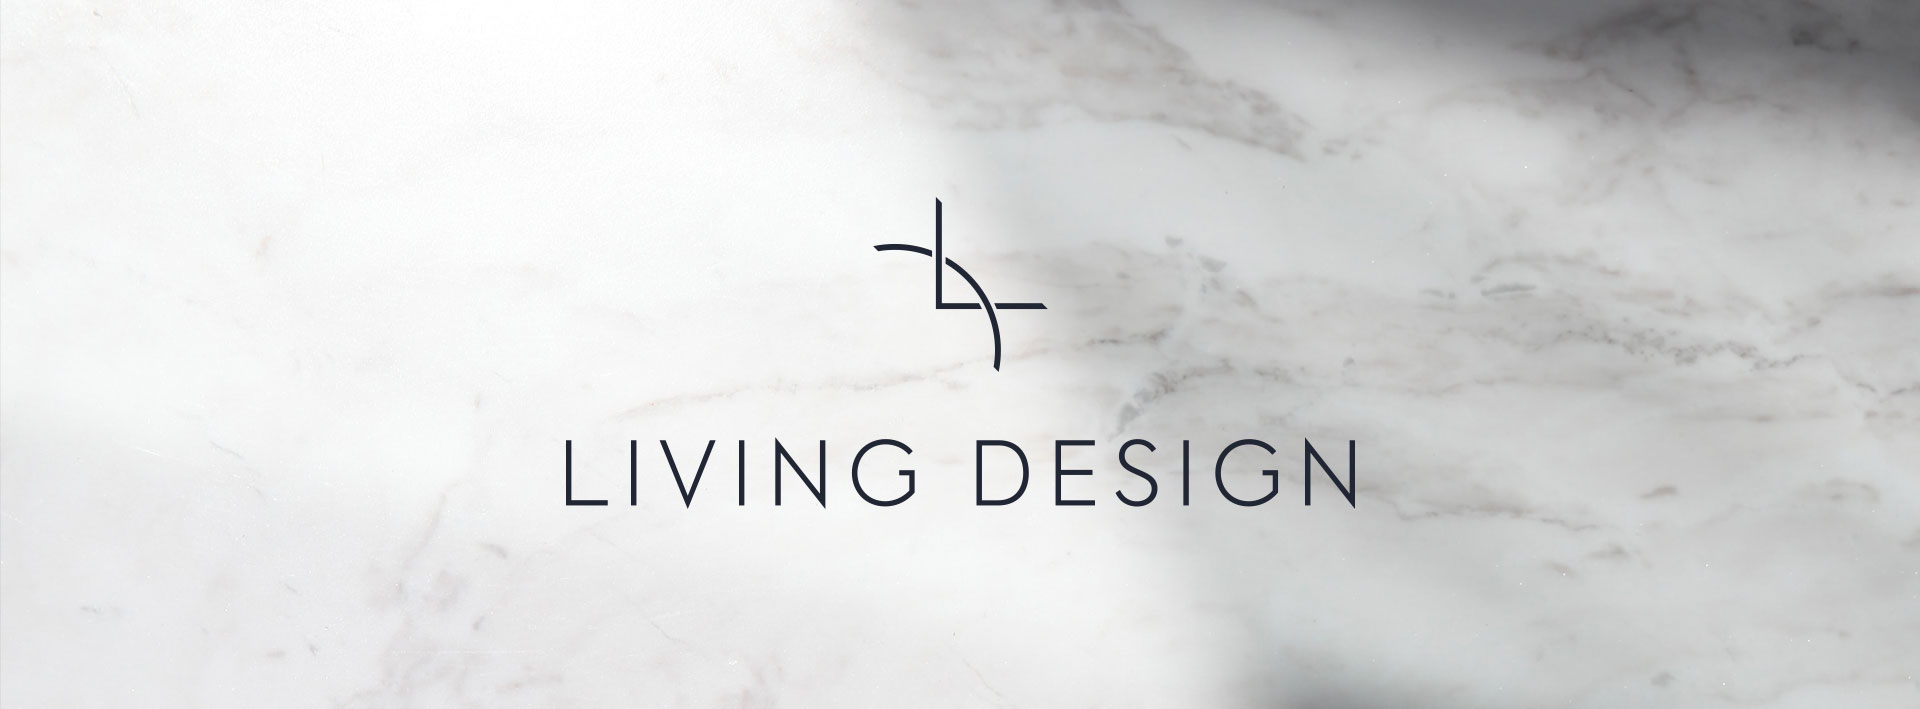 Living Design Logo On White Marble Textured Background